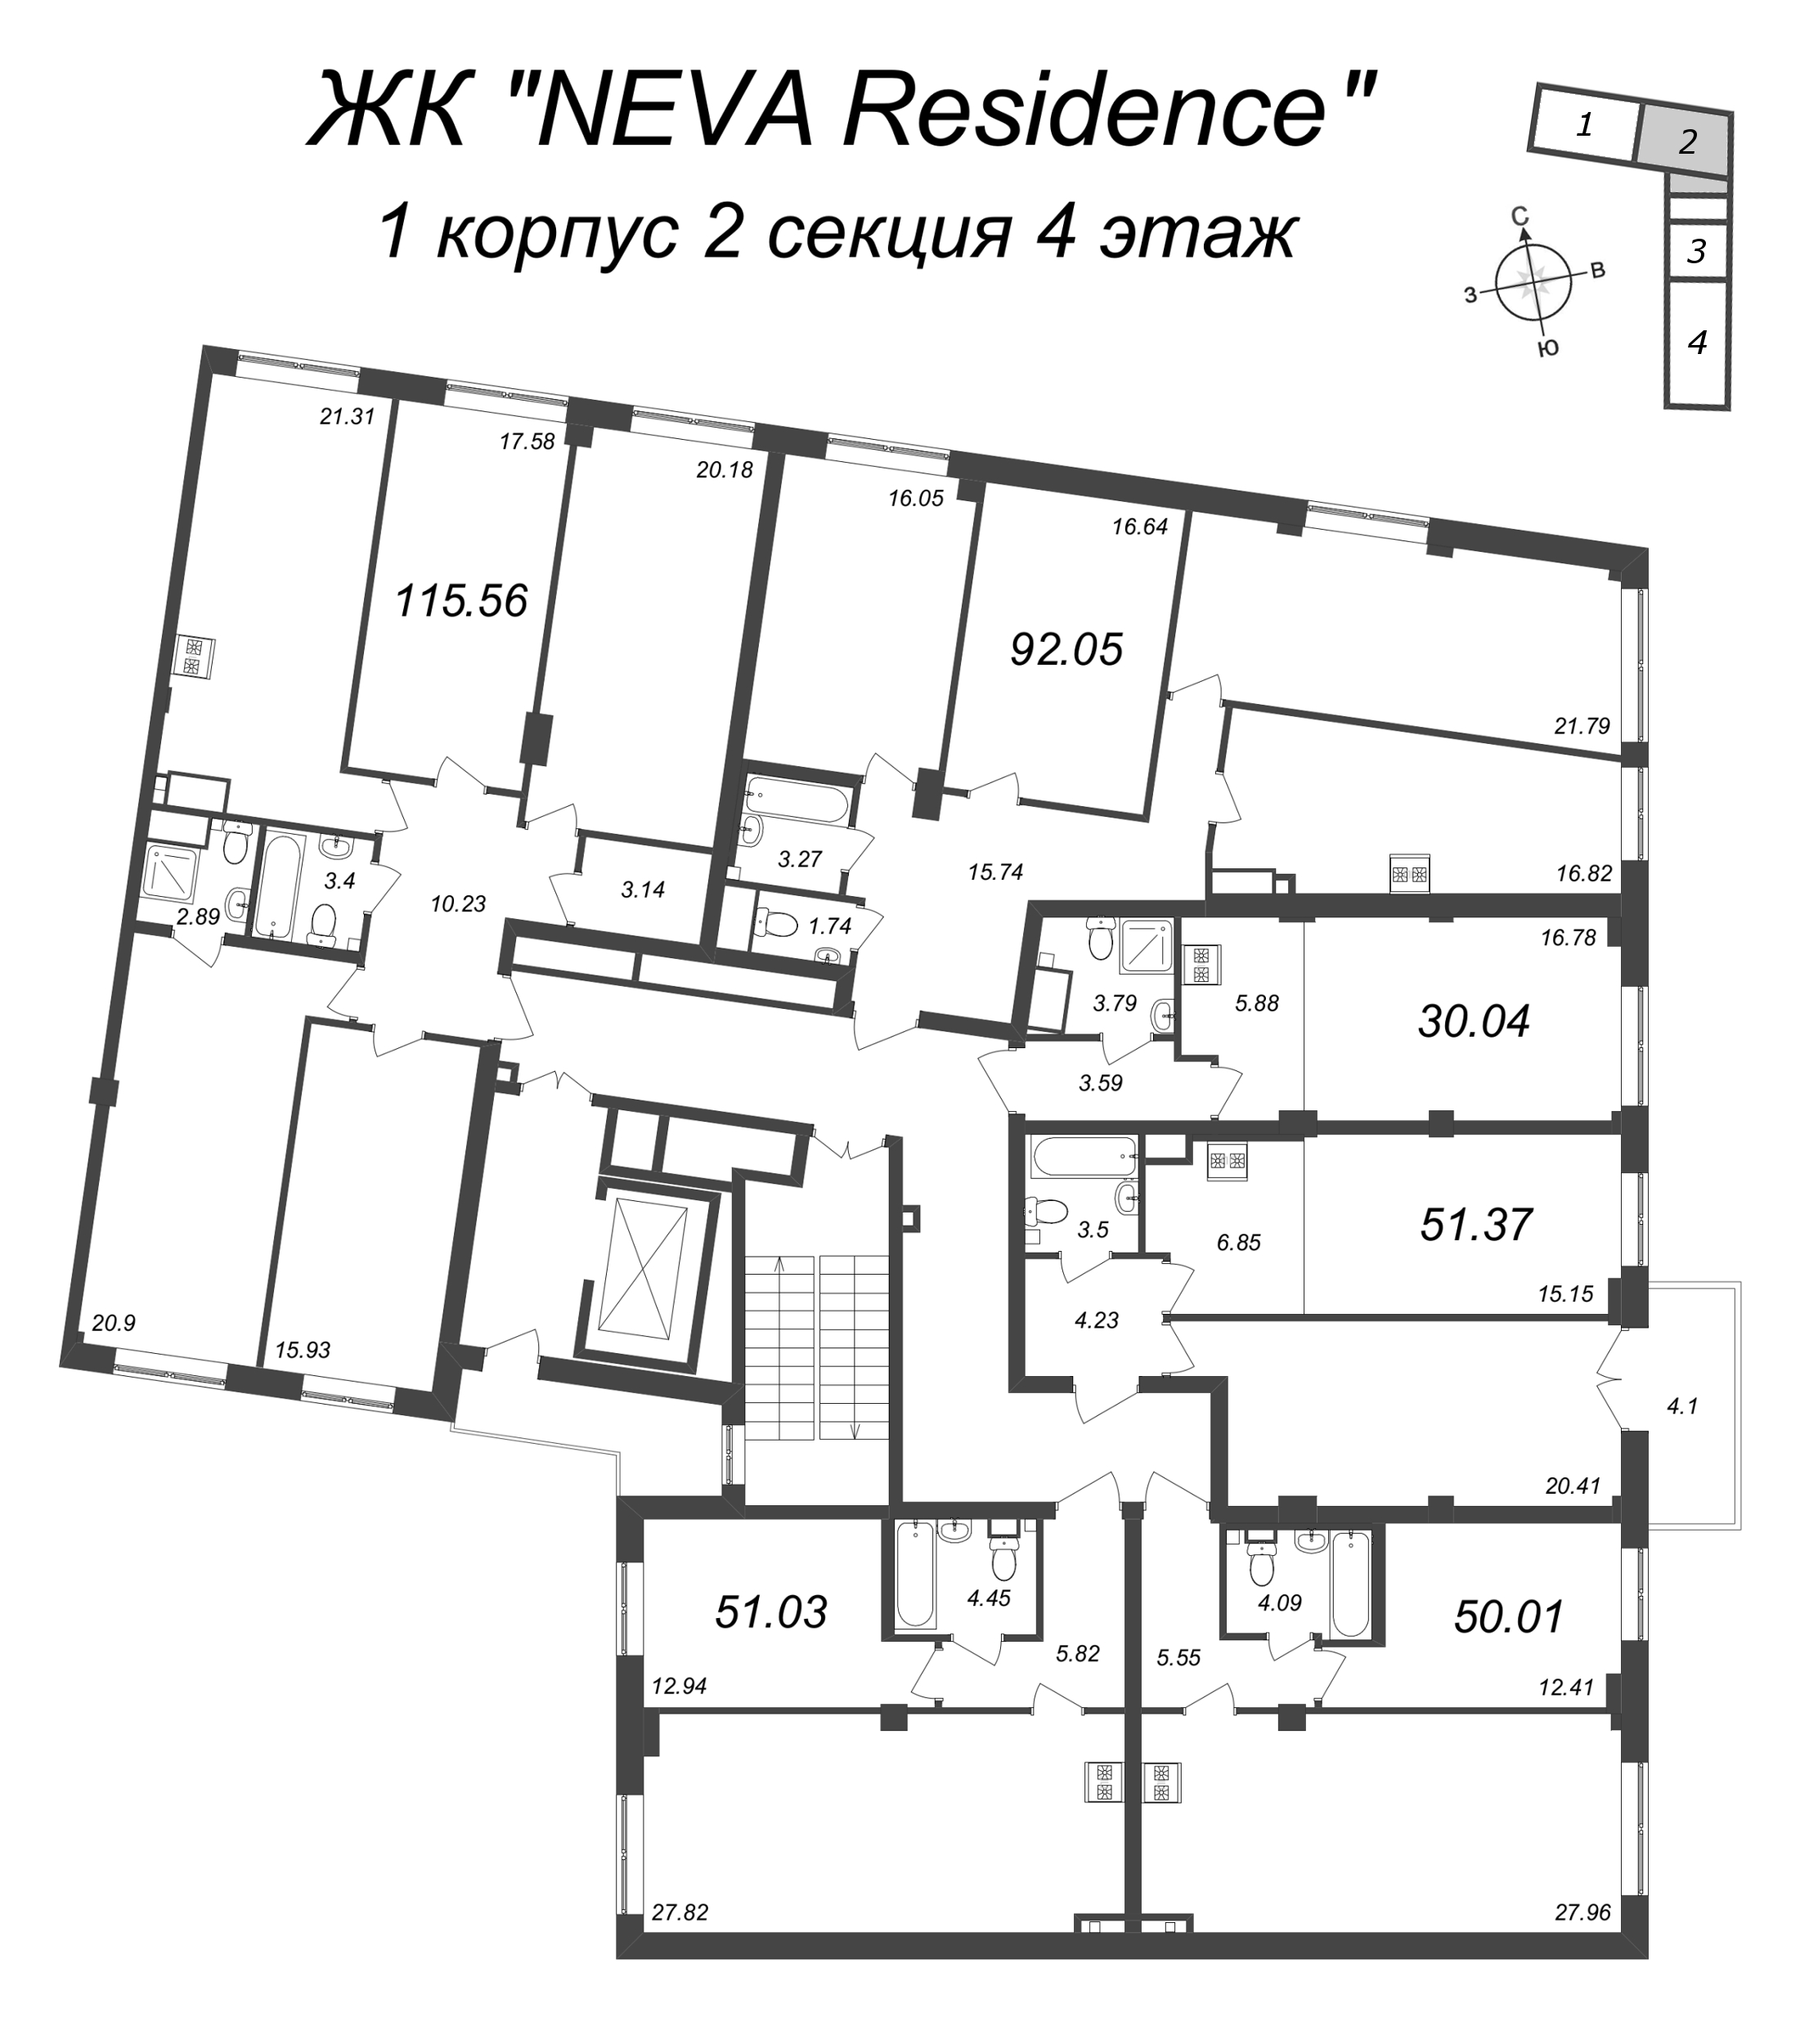 2-комнатная (Евро) квартира, 51.03 м² - планировка этажа